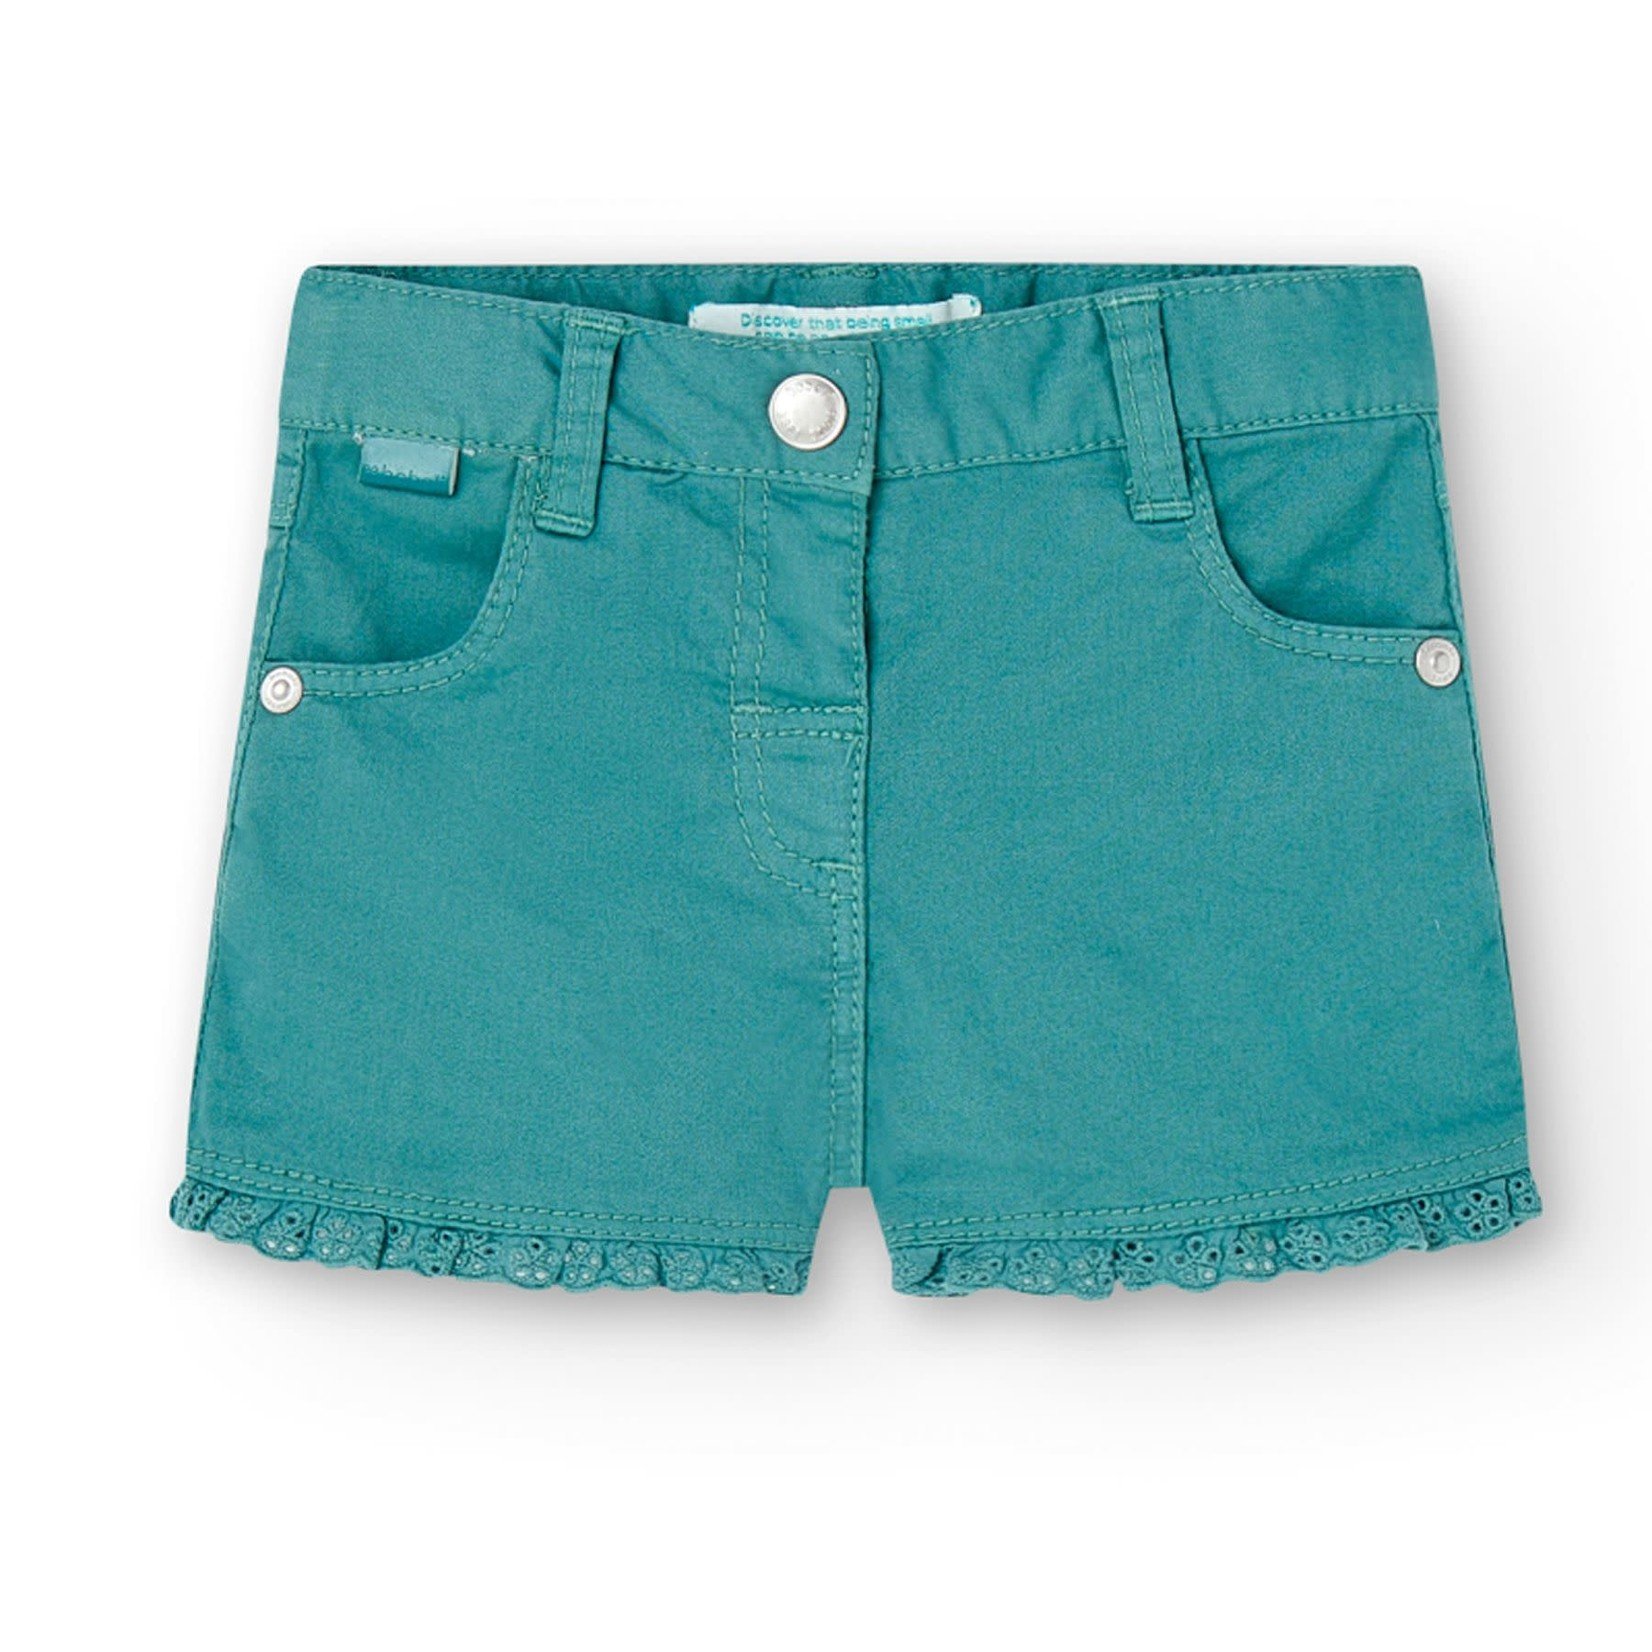 Boboli BOBOLI - Green-grey canvas shorts with lace details